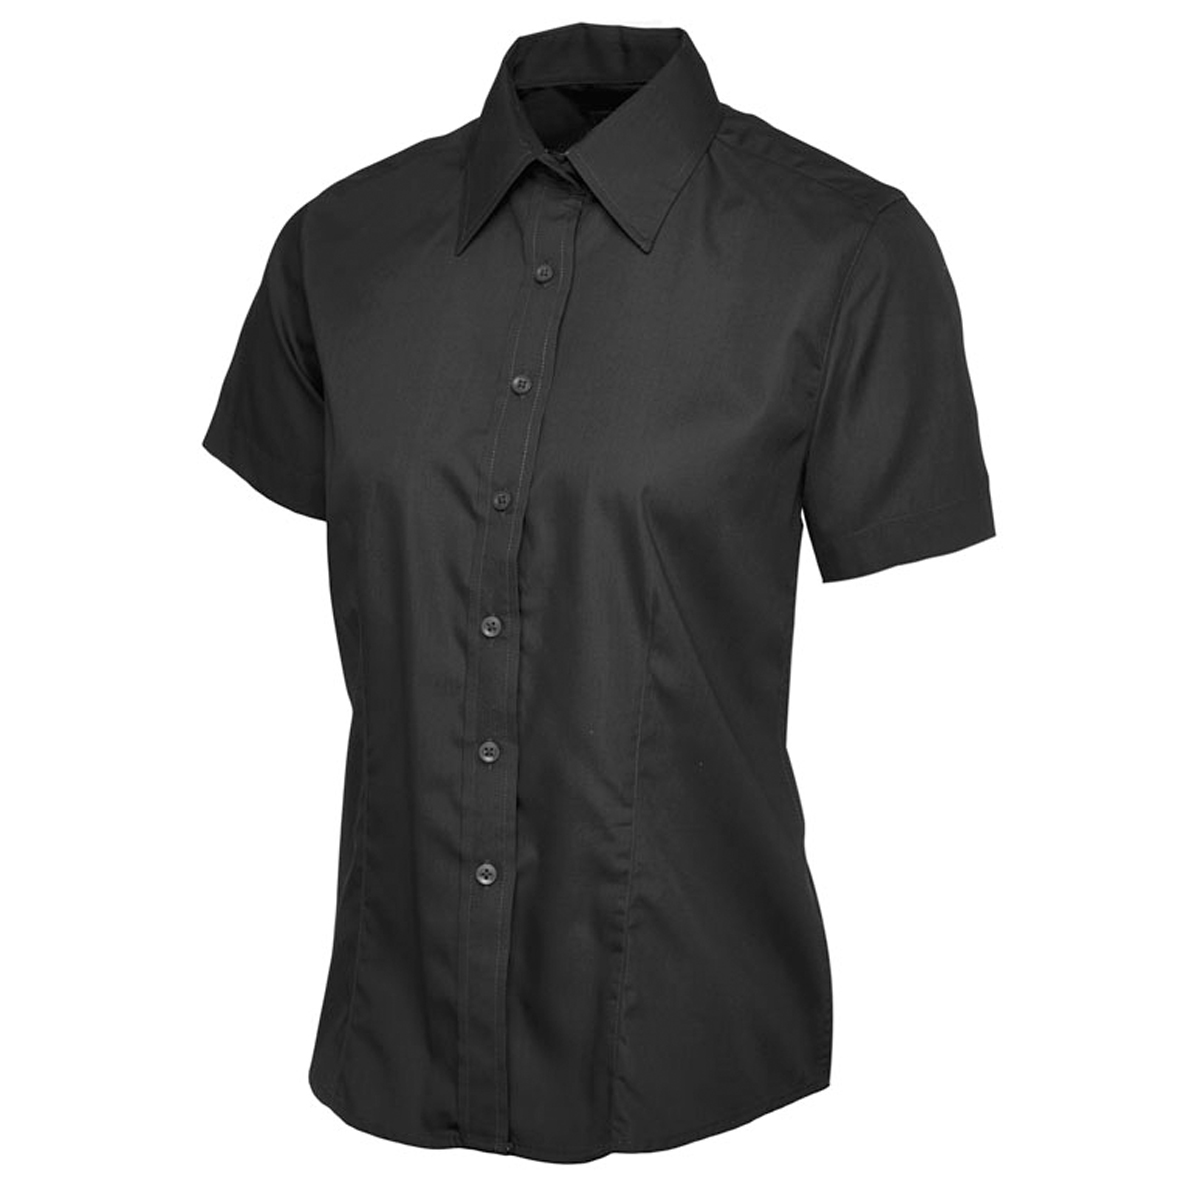 Uc712 - black - 2xl - ladies poplin short sleeve shirt